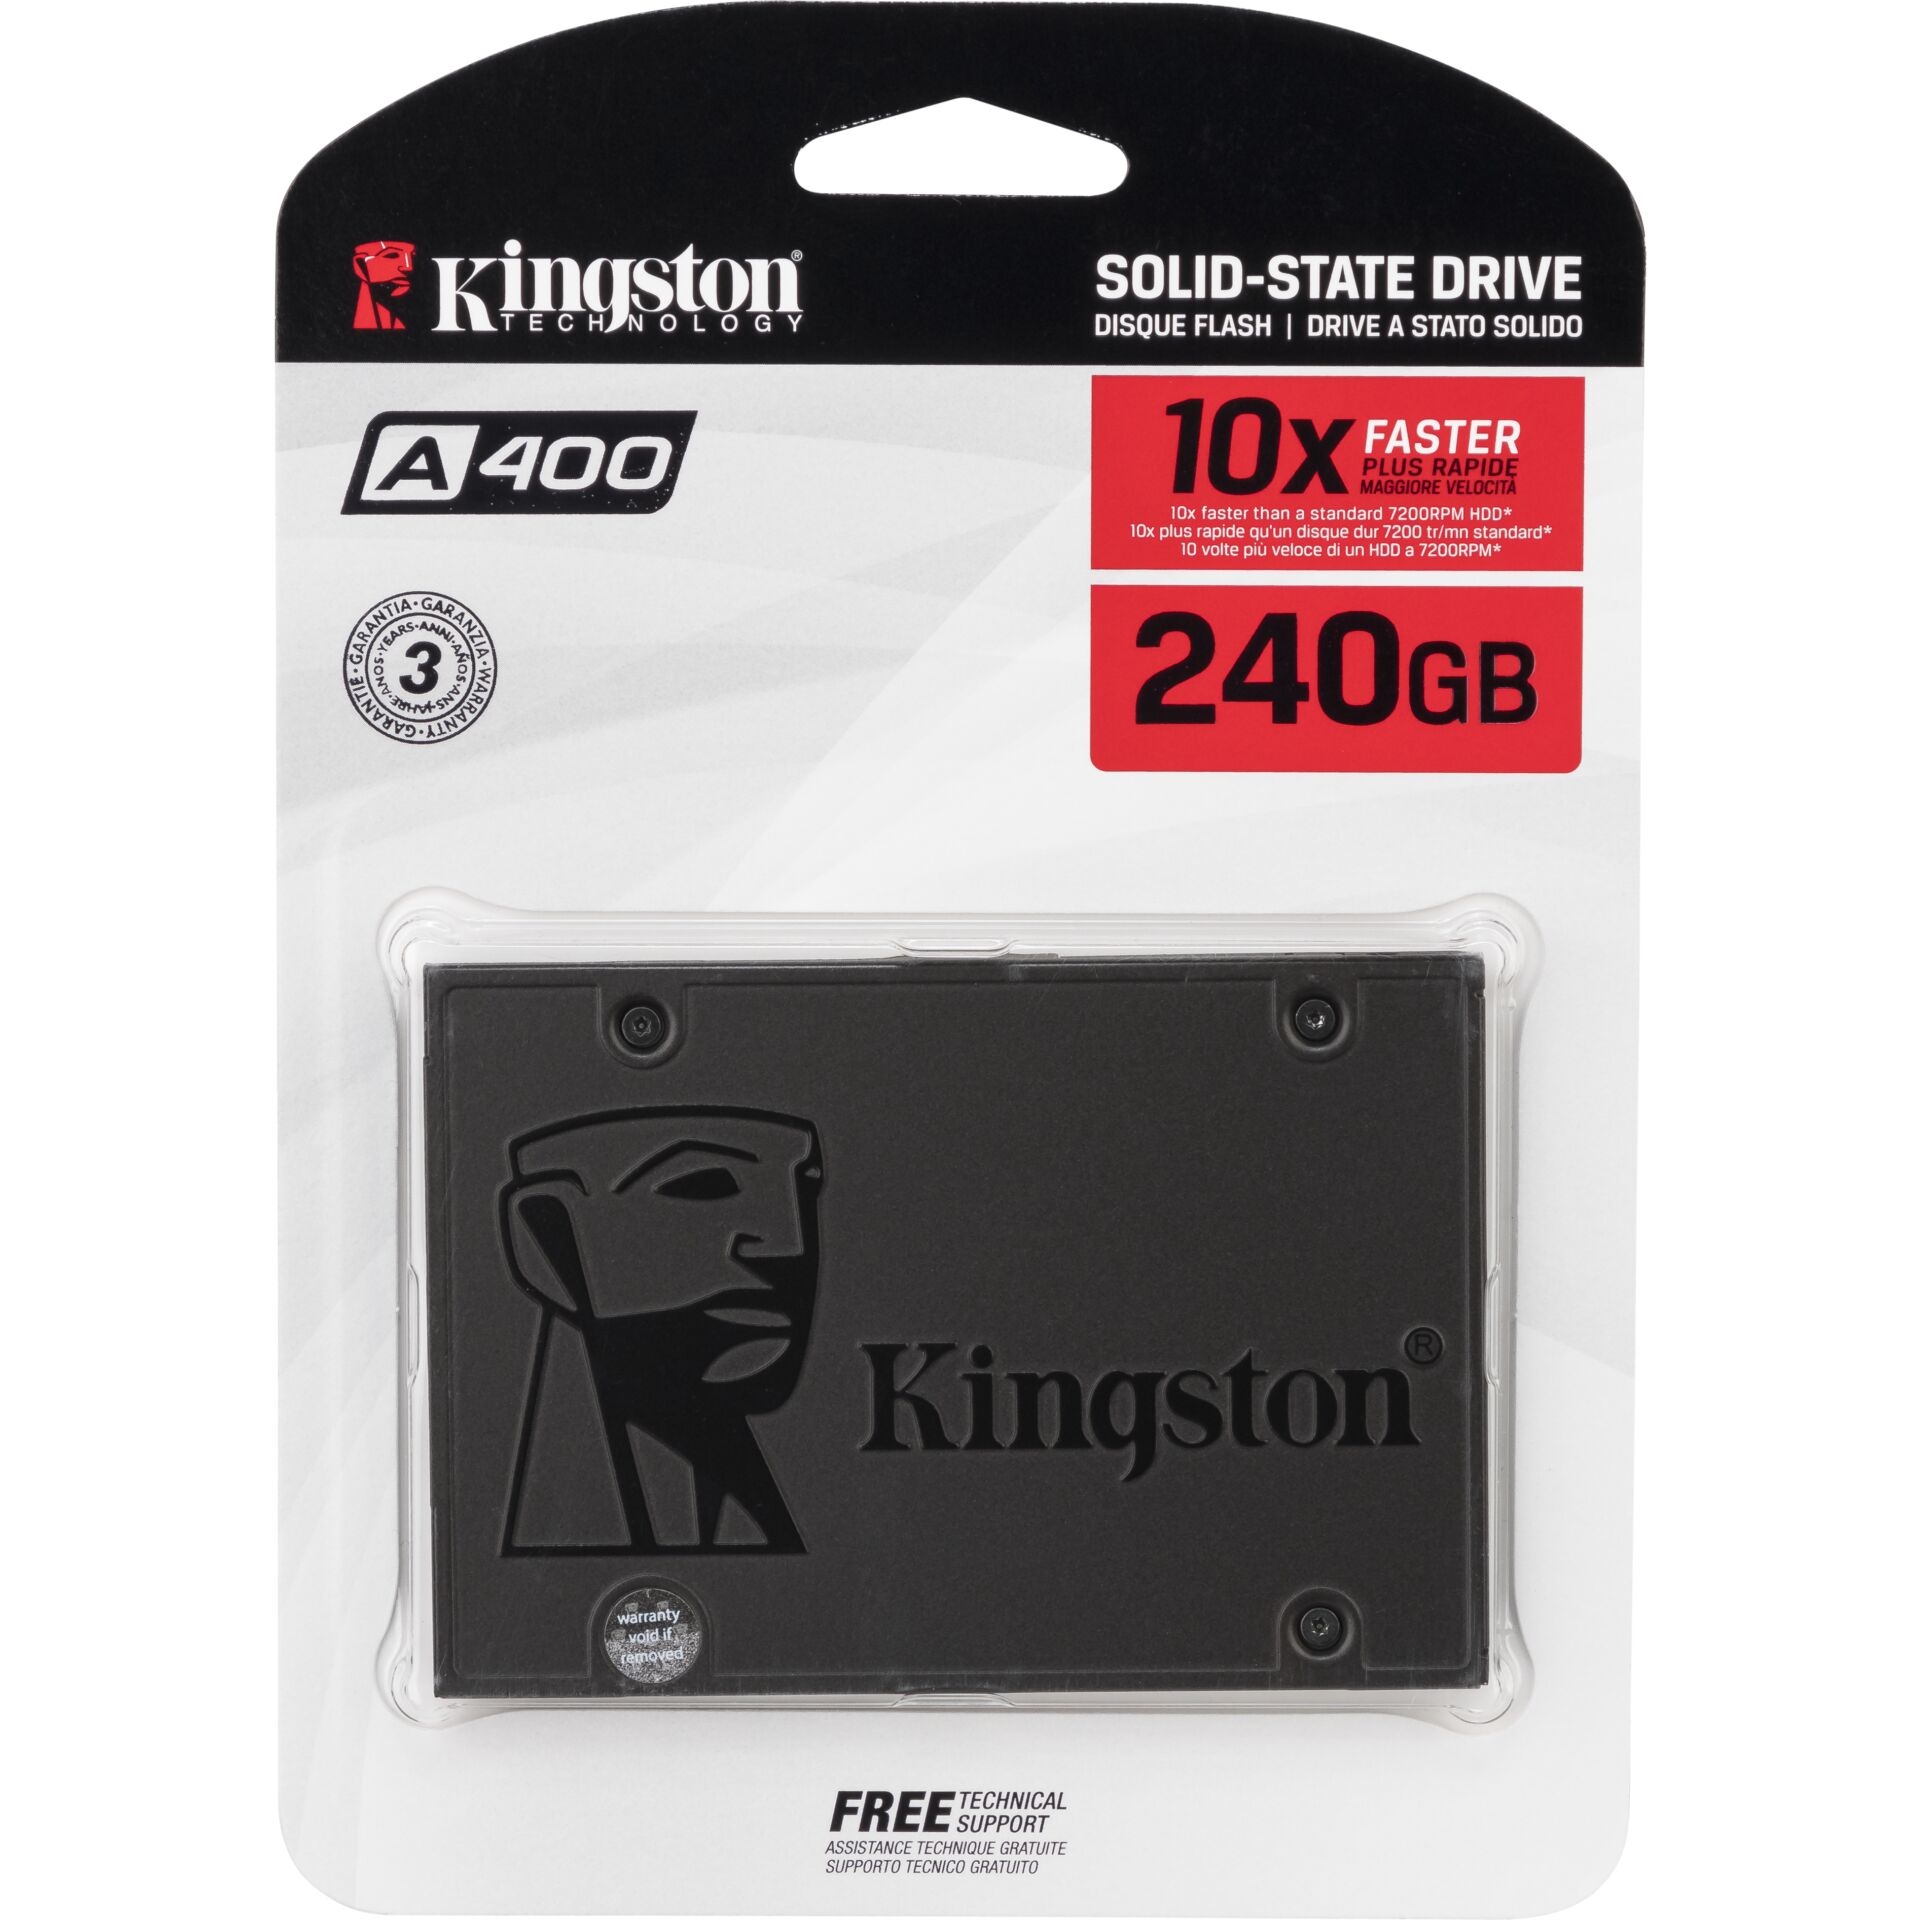 240 GB SSD Kingston A400, SATA 6,4cm / 2.5 Zoll SATA 6Gb/s lesen: 500MB/s, schreiben: 350MB/s, TBW: 80TB